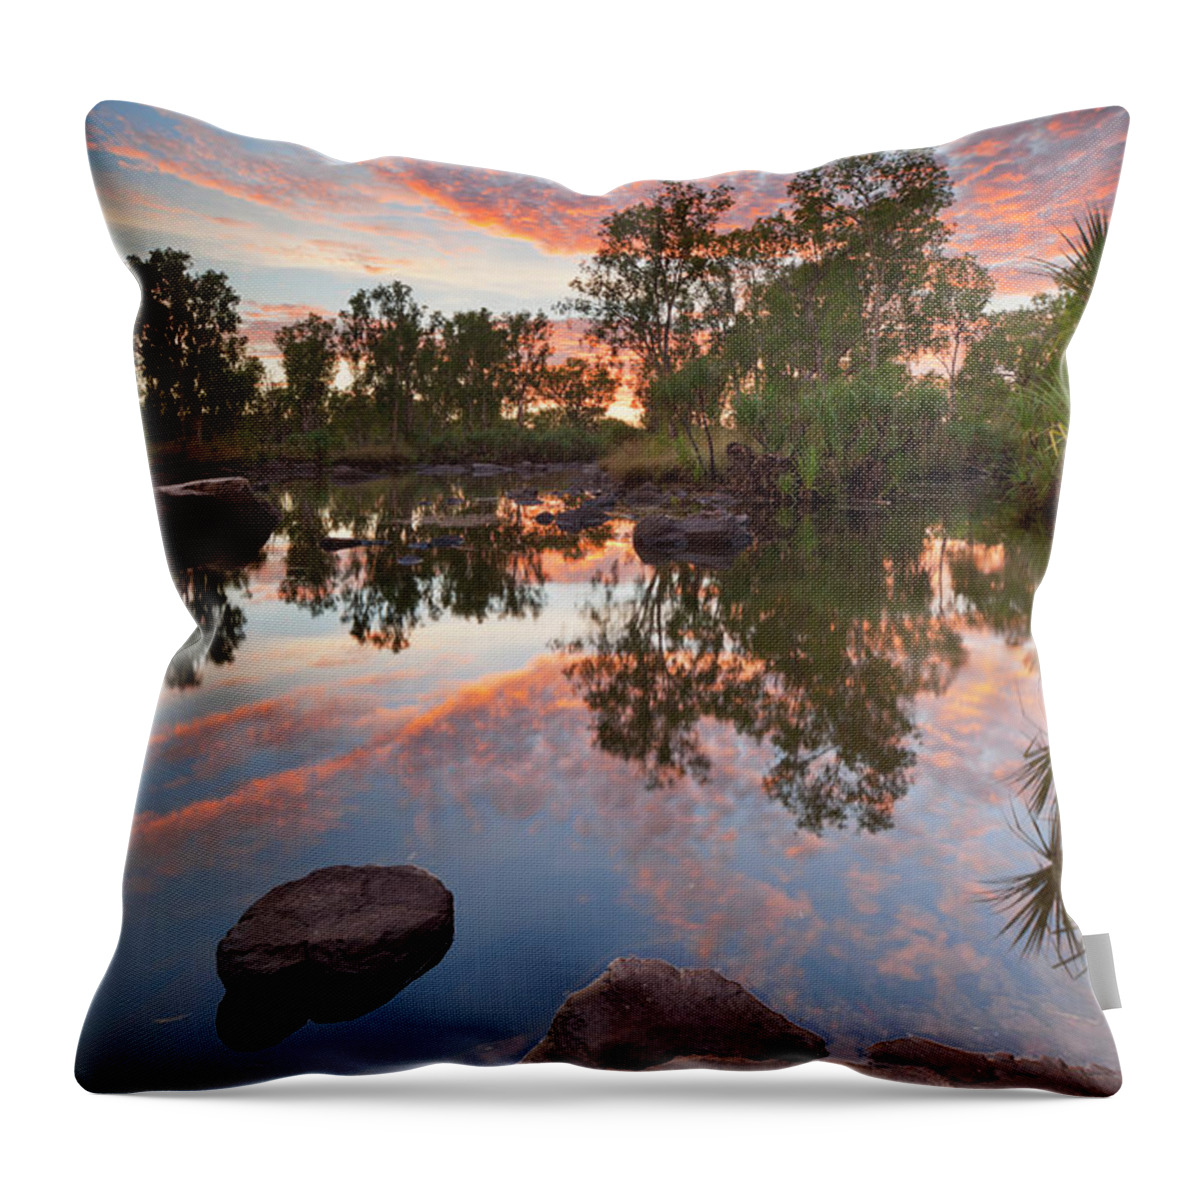 Billabong Throw Pillow featuring the photograph Billabong Or Small Pond At Manning by Sara winter